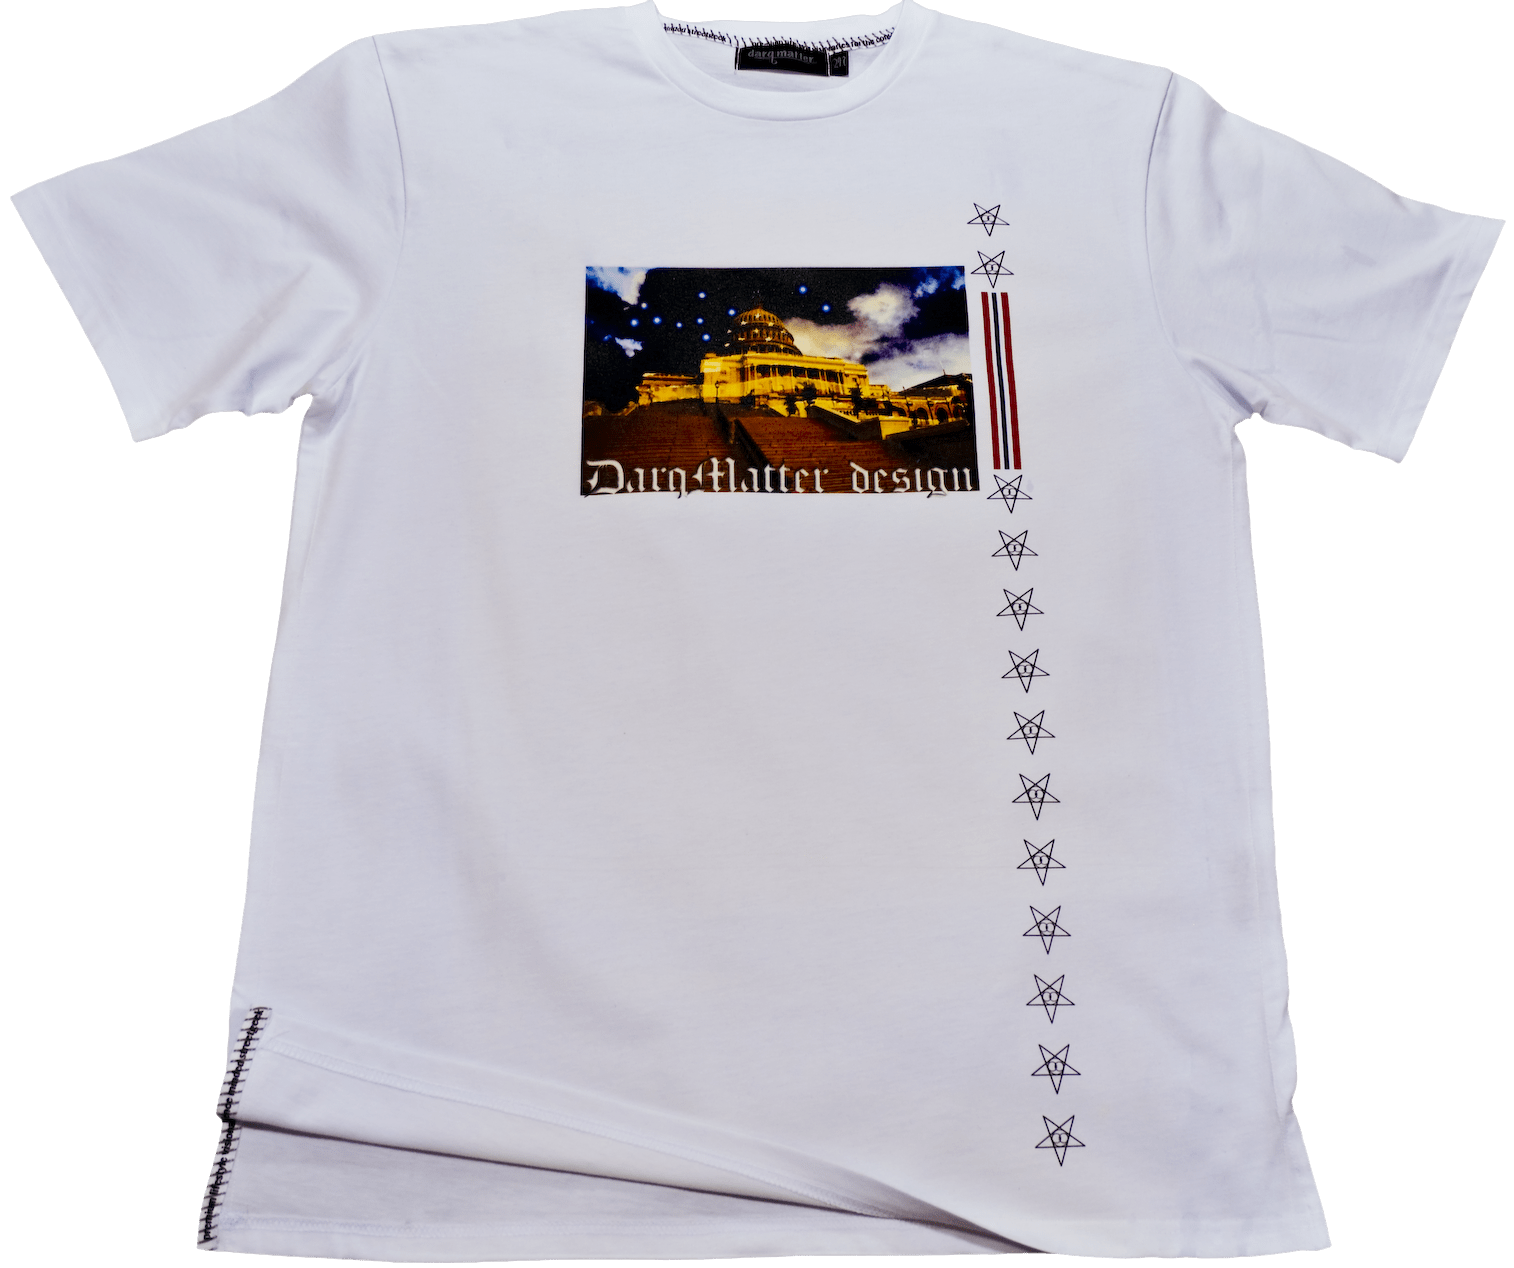 DarqMatterDesign CutnSew T-Shirts Small / White Capitol Knowledge